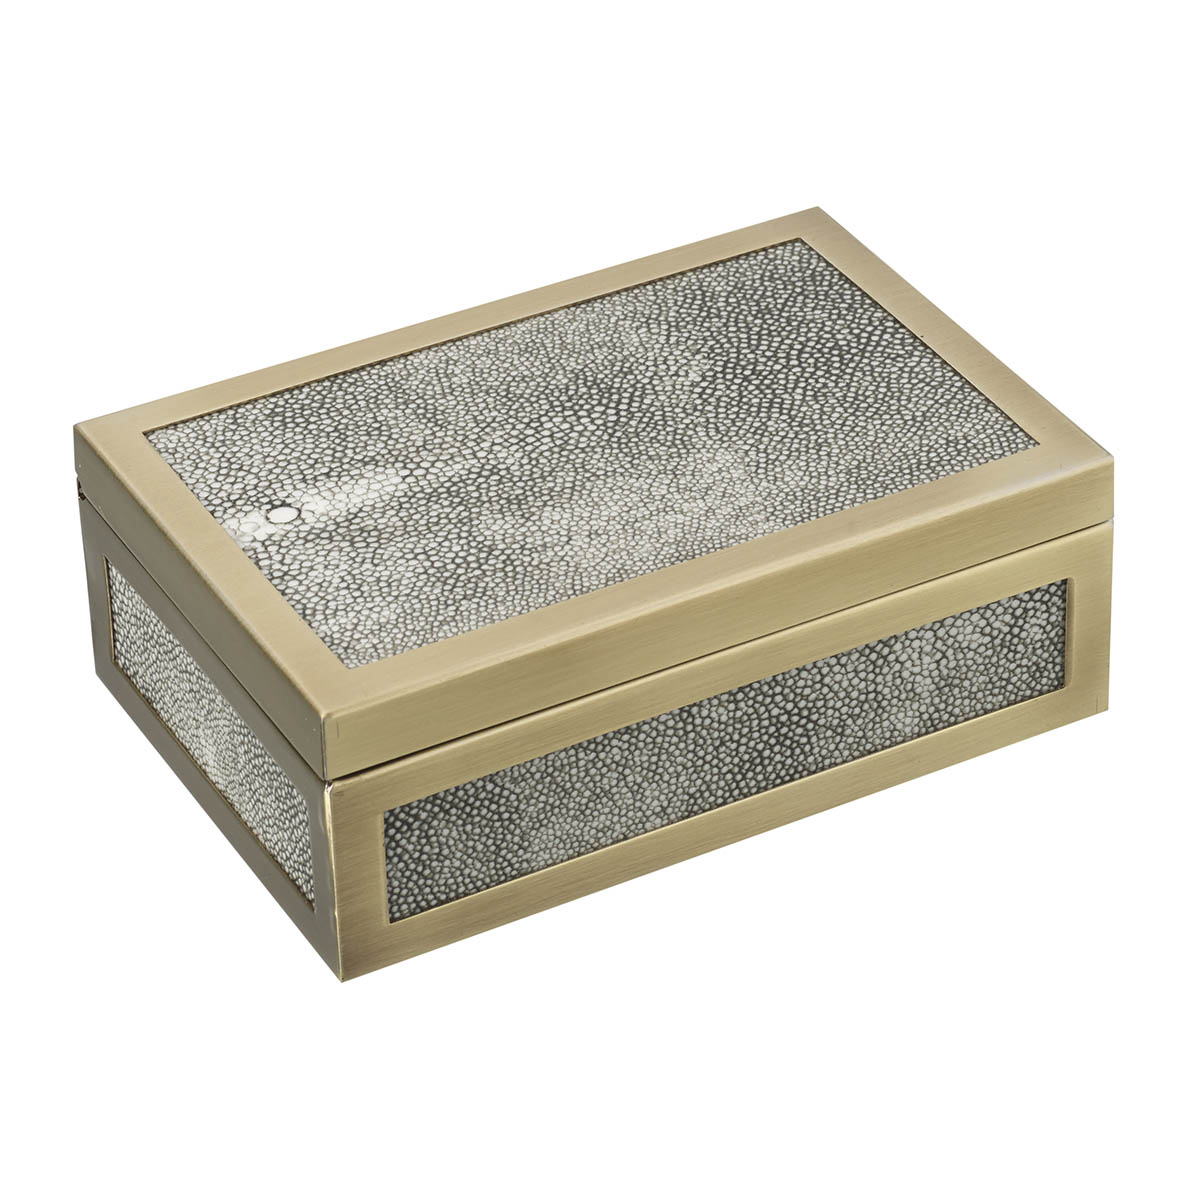 Deco box 15x10x5 cm MICHELLE JEWELRY leather grey-bronze